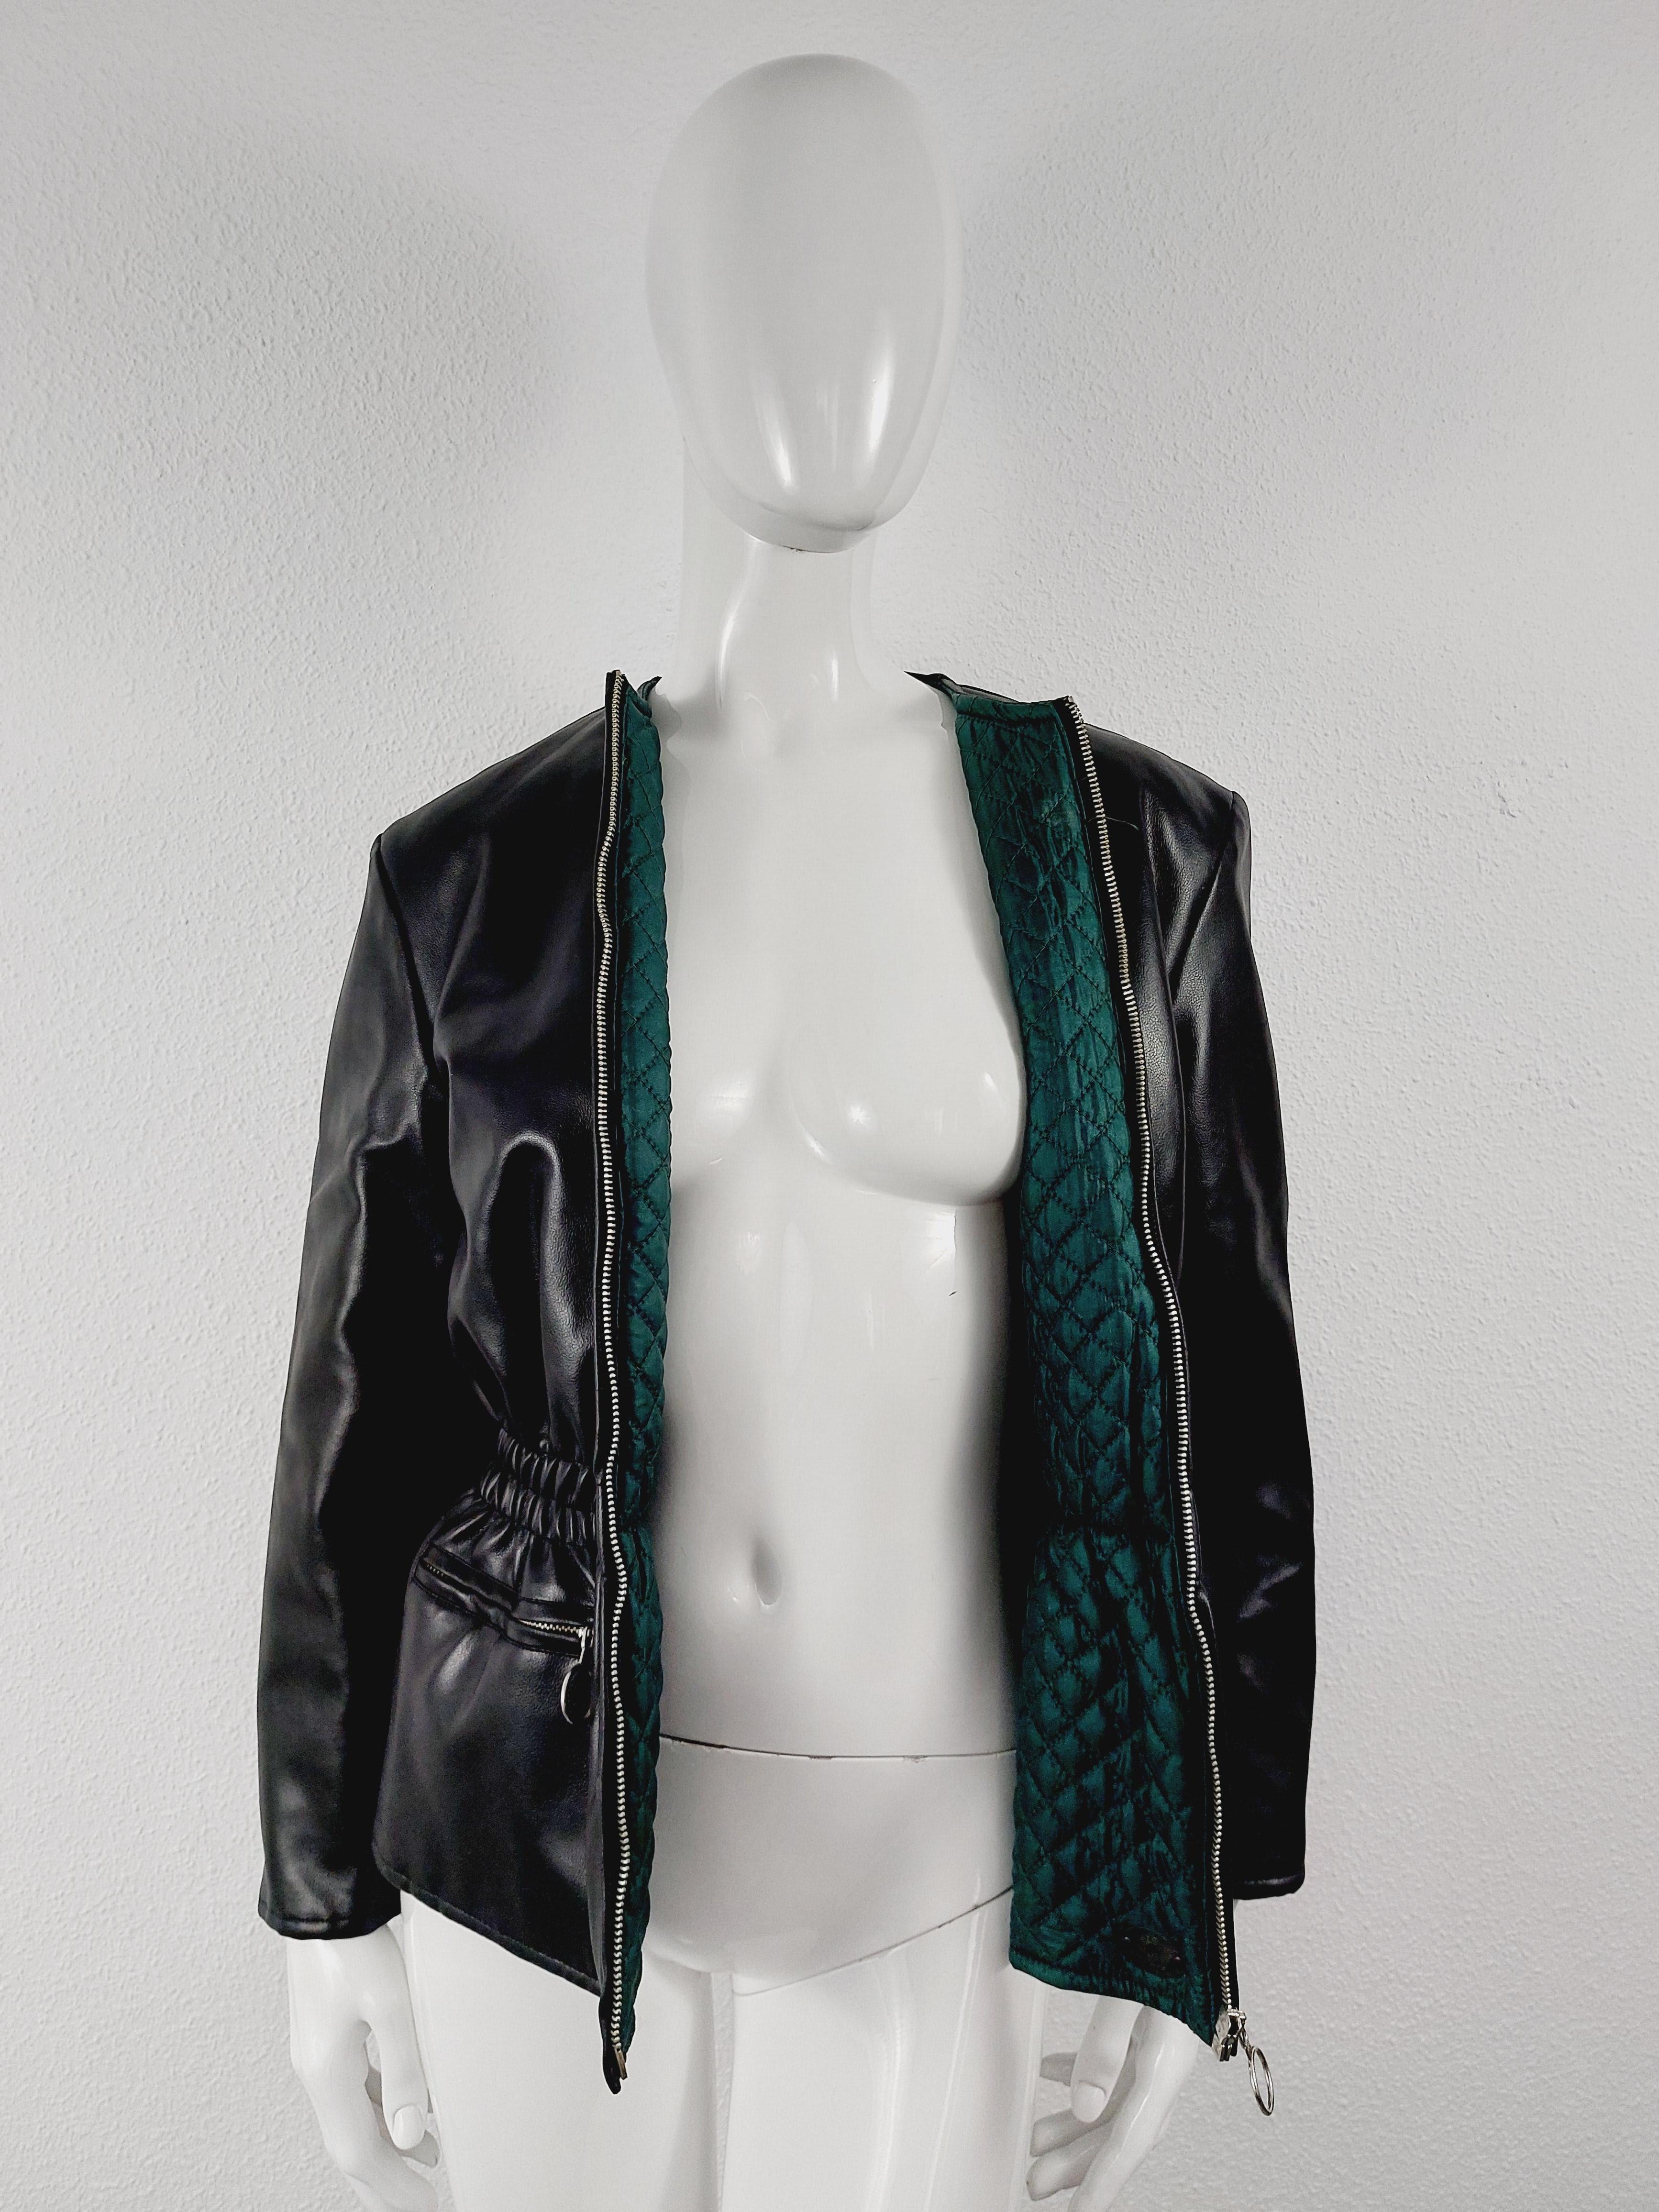 Jean Paul Gaultier Biker Motorcycle Leather Look Metal Black 90 Punk Jacket Coat For Sale 6